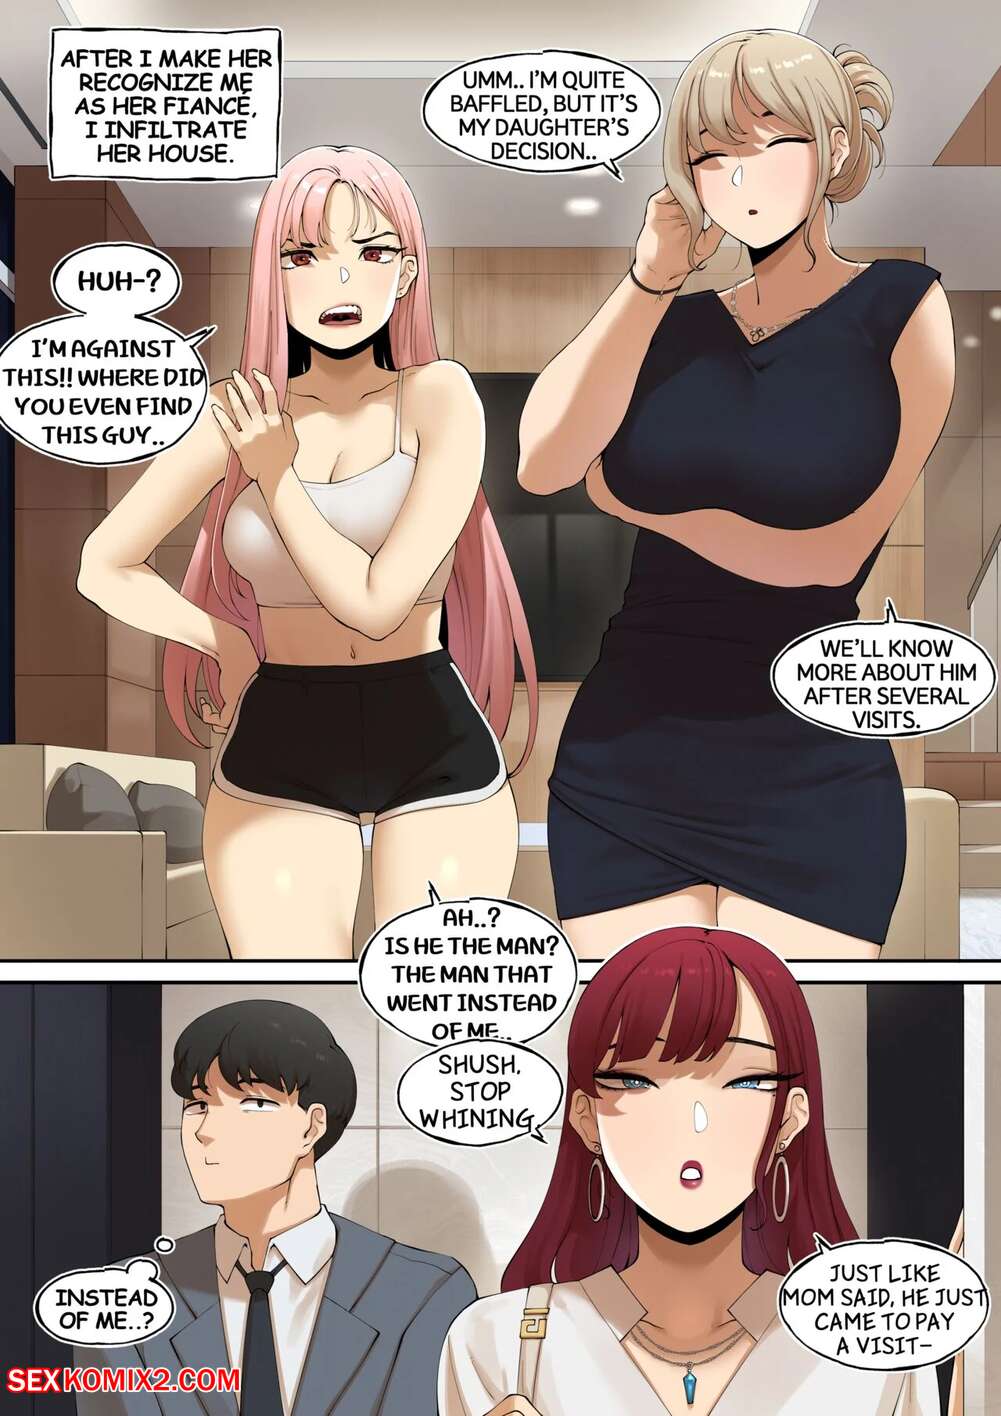 Anime hypno porn comics